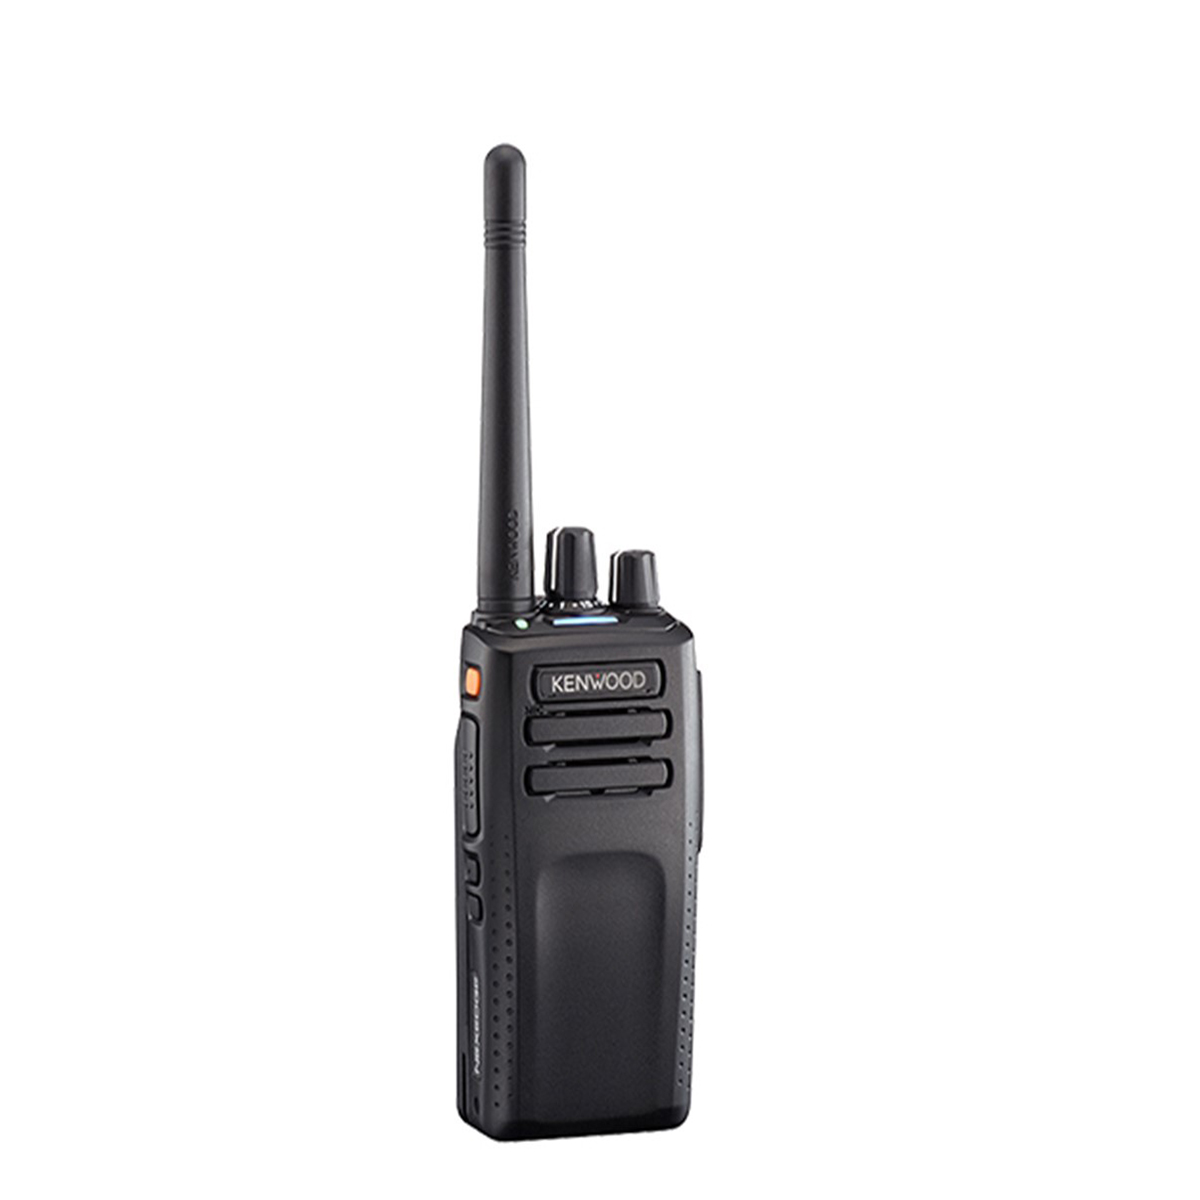 Radio KENWOOD NX-3200 Digital VHF 136-174 MHz sin Pantalla y sin Teclado